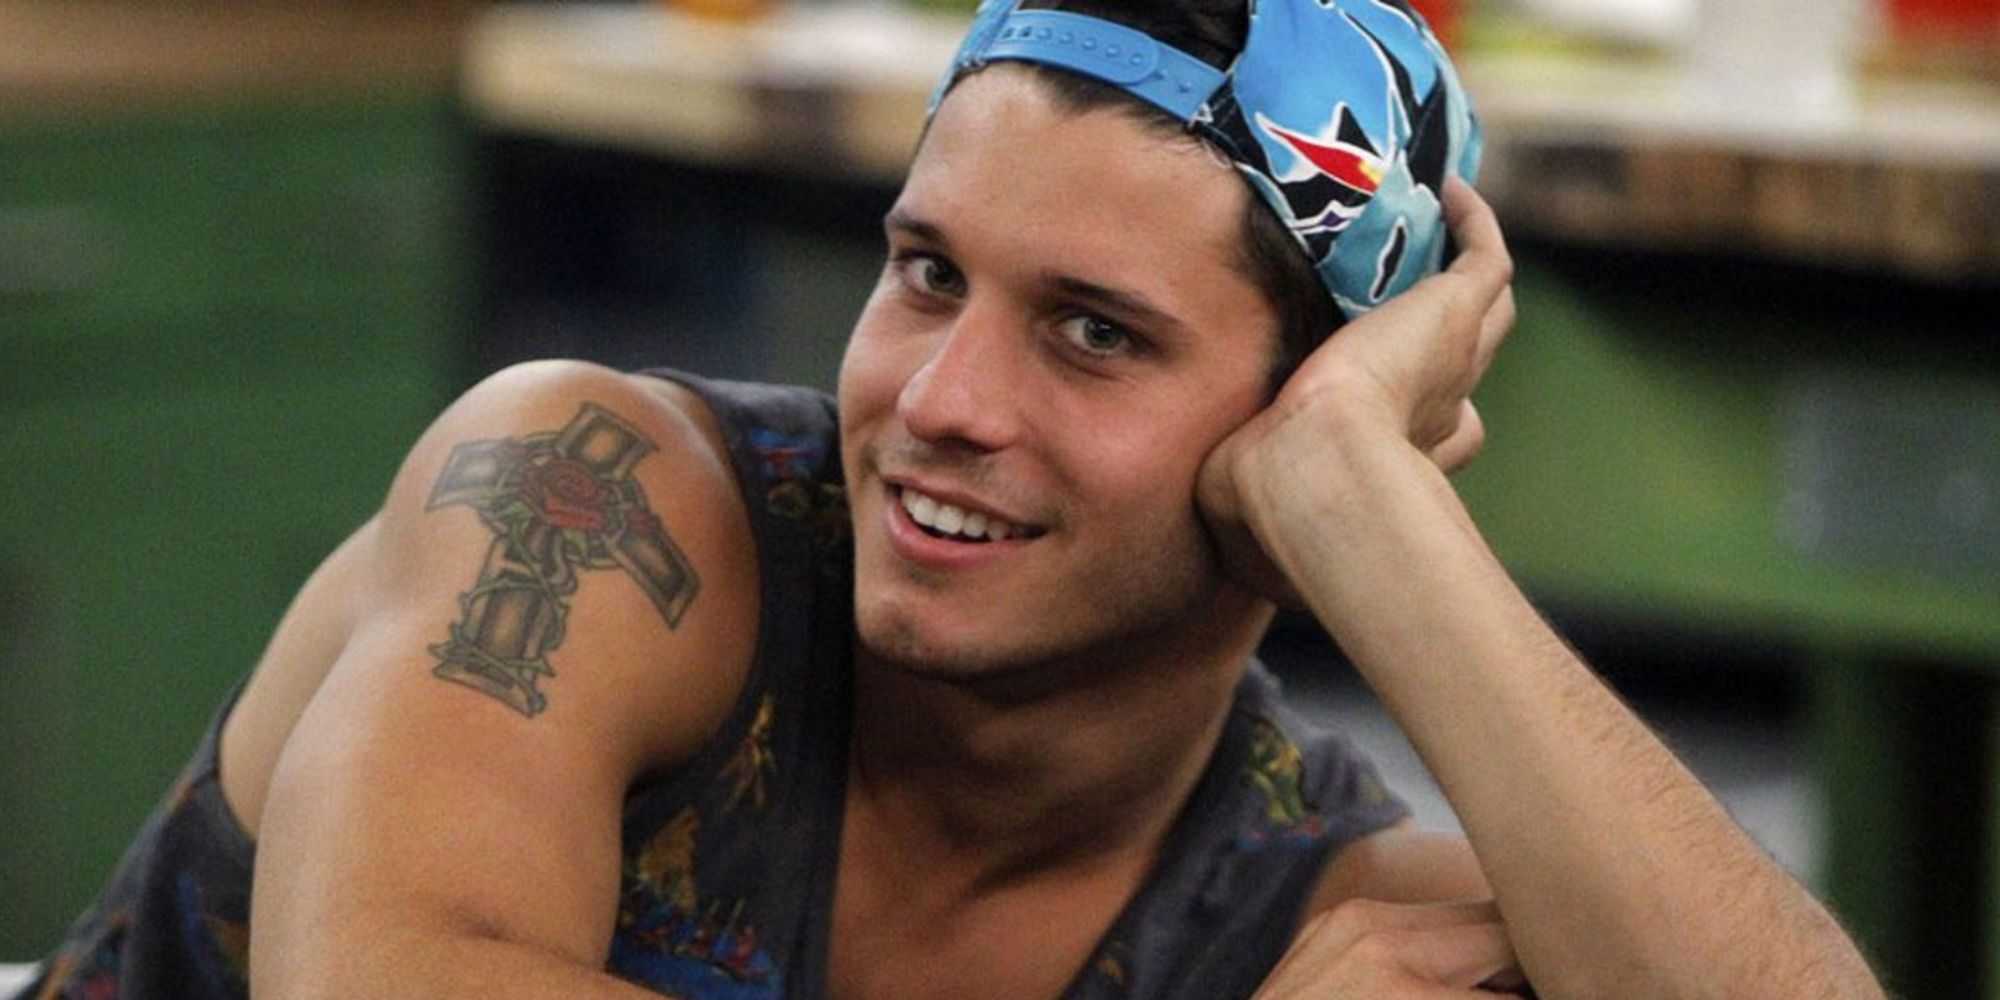 Cody Calafiore on Big Brother 16 smiling